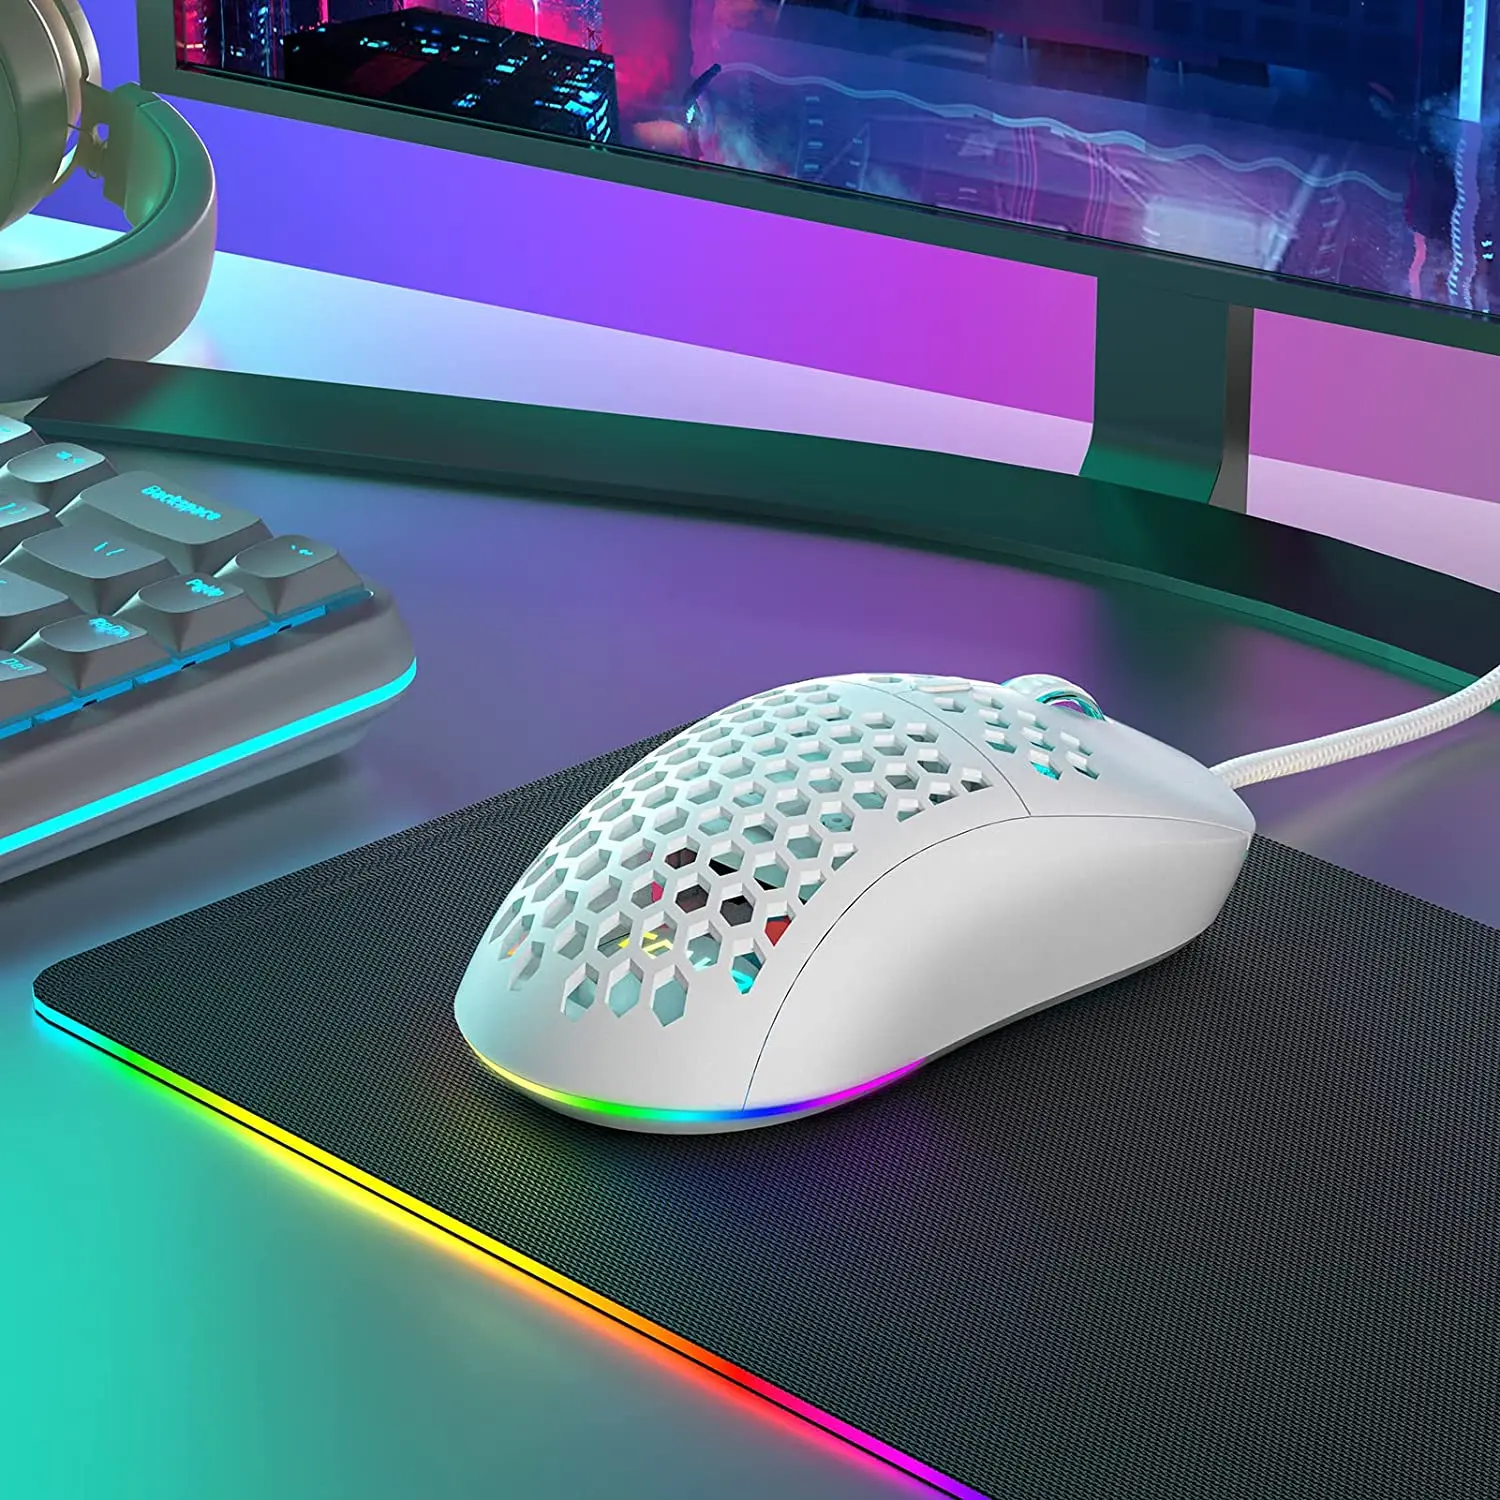 TMKB Falcon M1SE Ultralight Honeycomb Gaming Mouse, High-Precision 12800DPI  Optical Sensor, 6 Programmable Buttons, Customizable RGB, Drag-Free